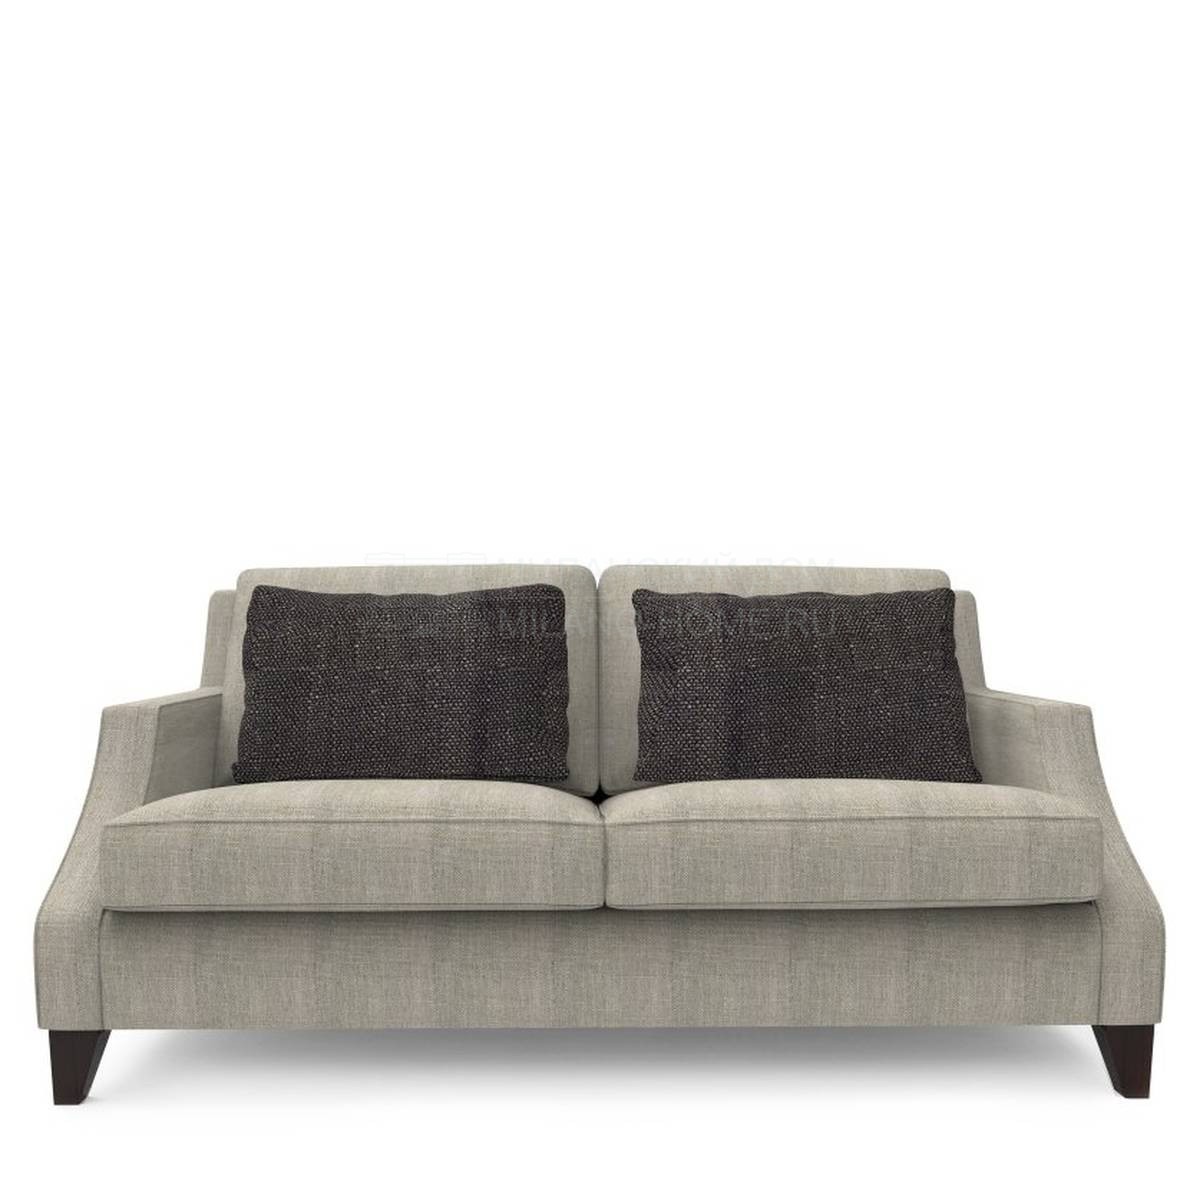 Прямой диван Dahlia two seater sofa из Италии фабрики MARIONI